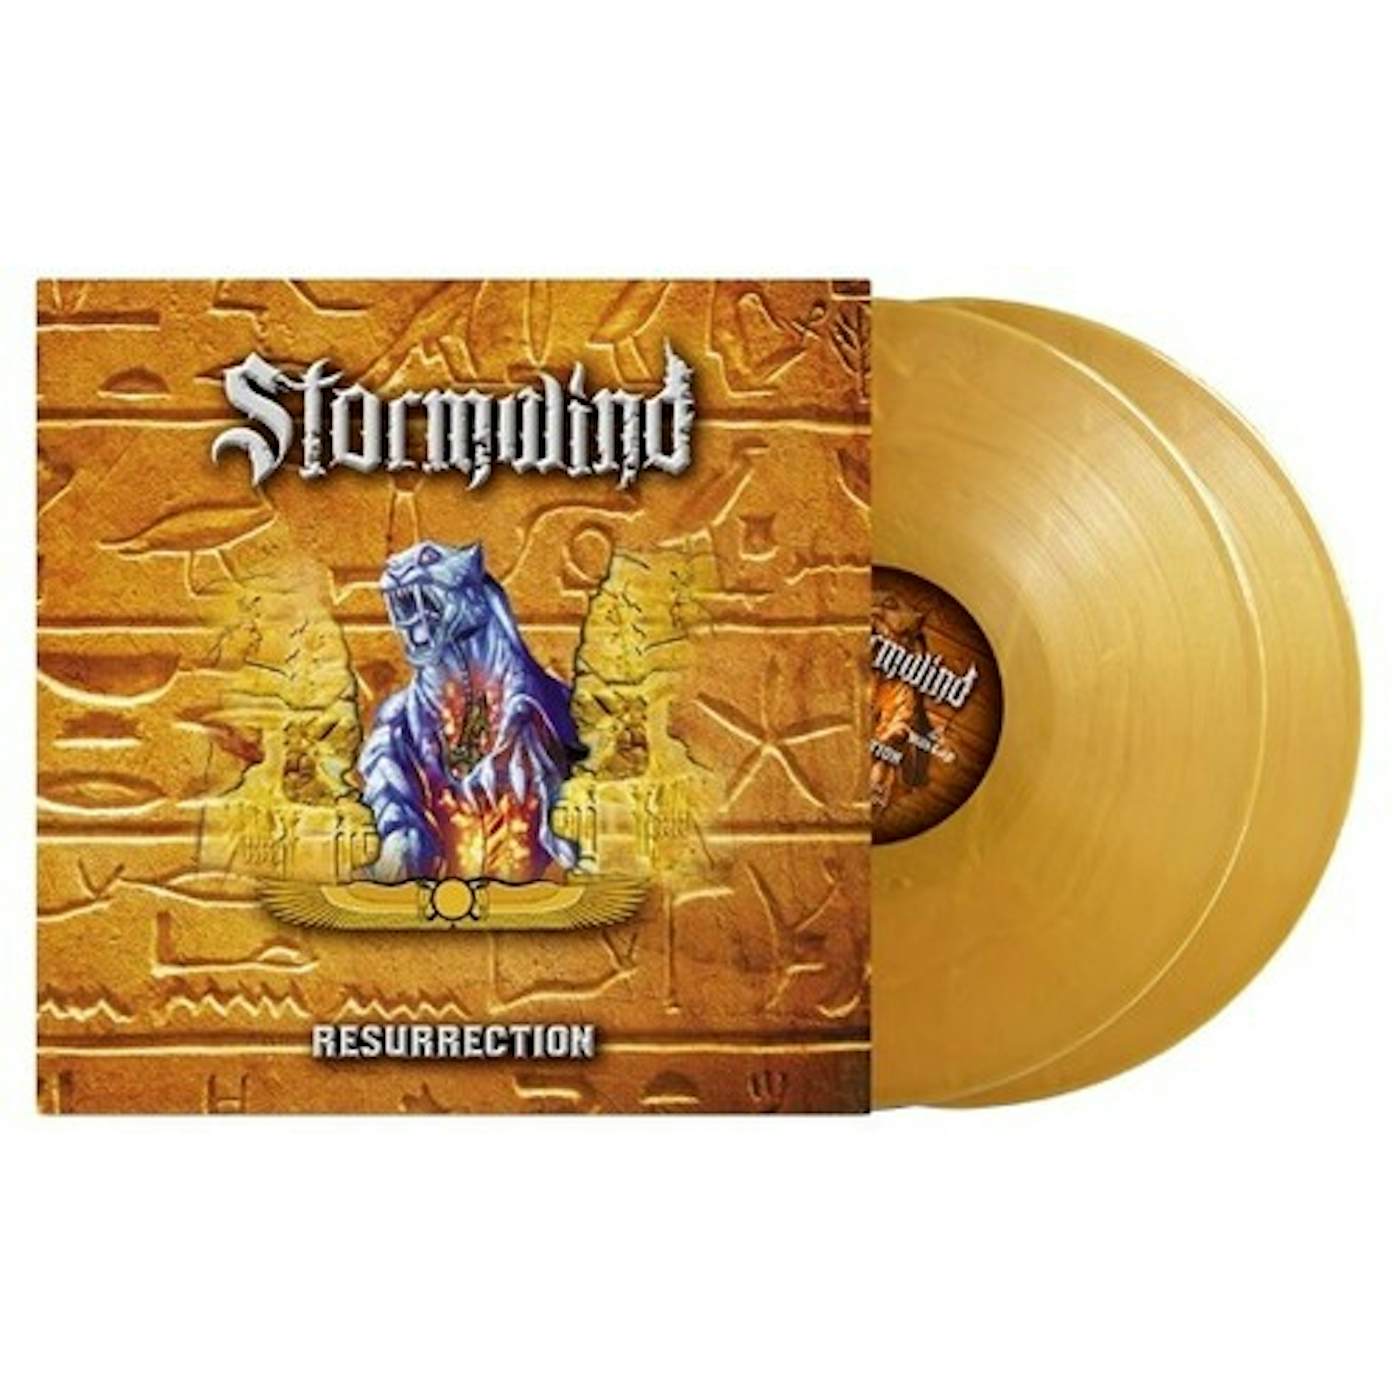 Stormwind RESURRECTION (MARBLE GOLD VINYL) Vinyl Record